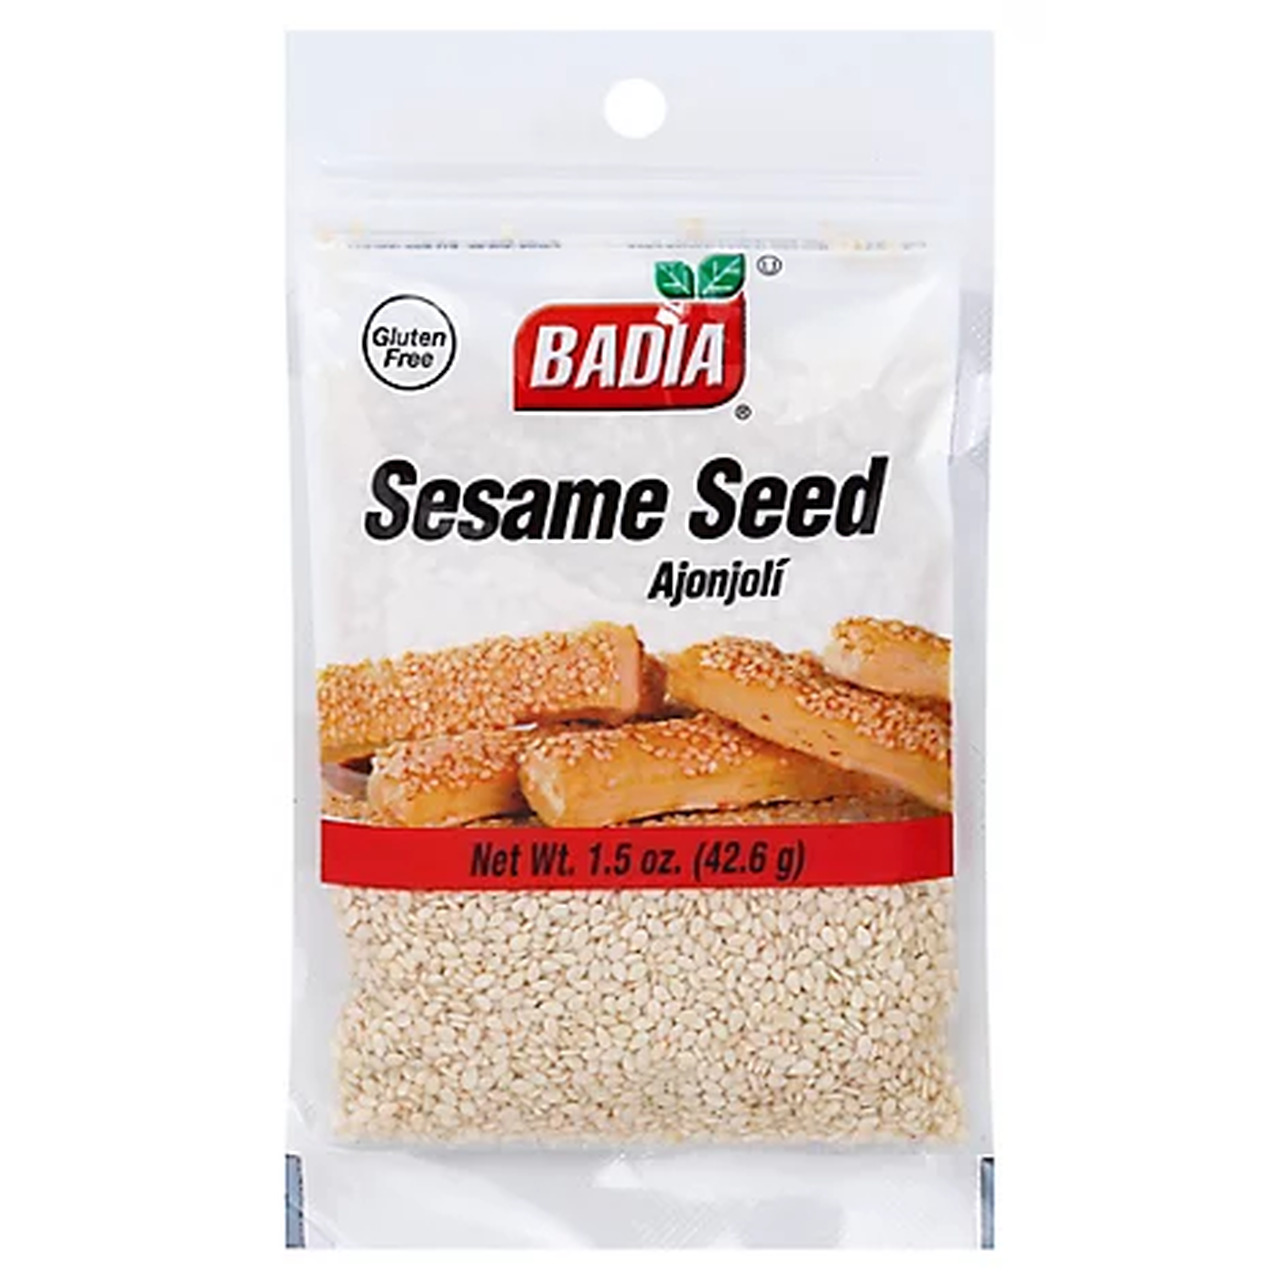 Badia Sesame Seed 42.6G